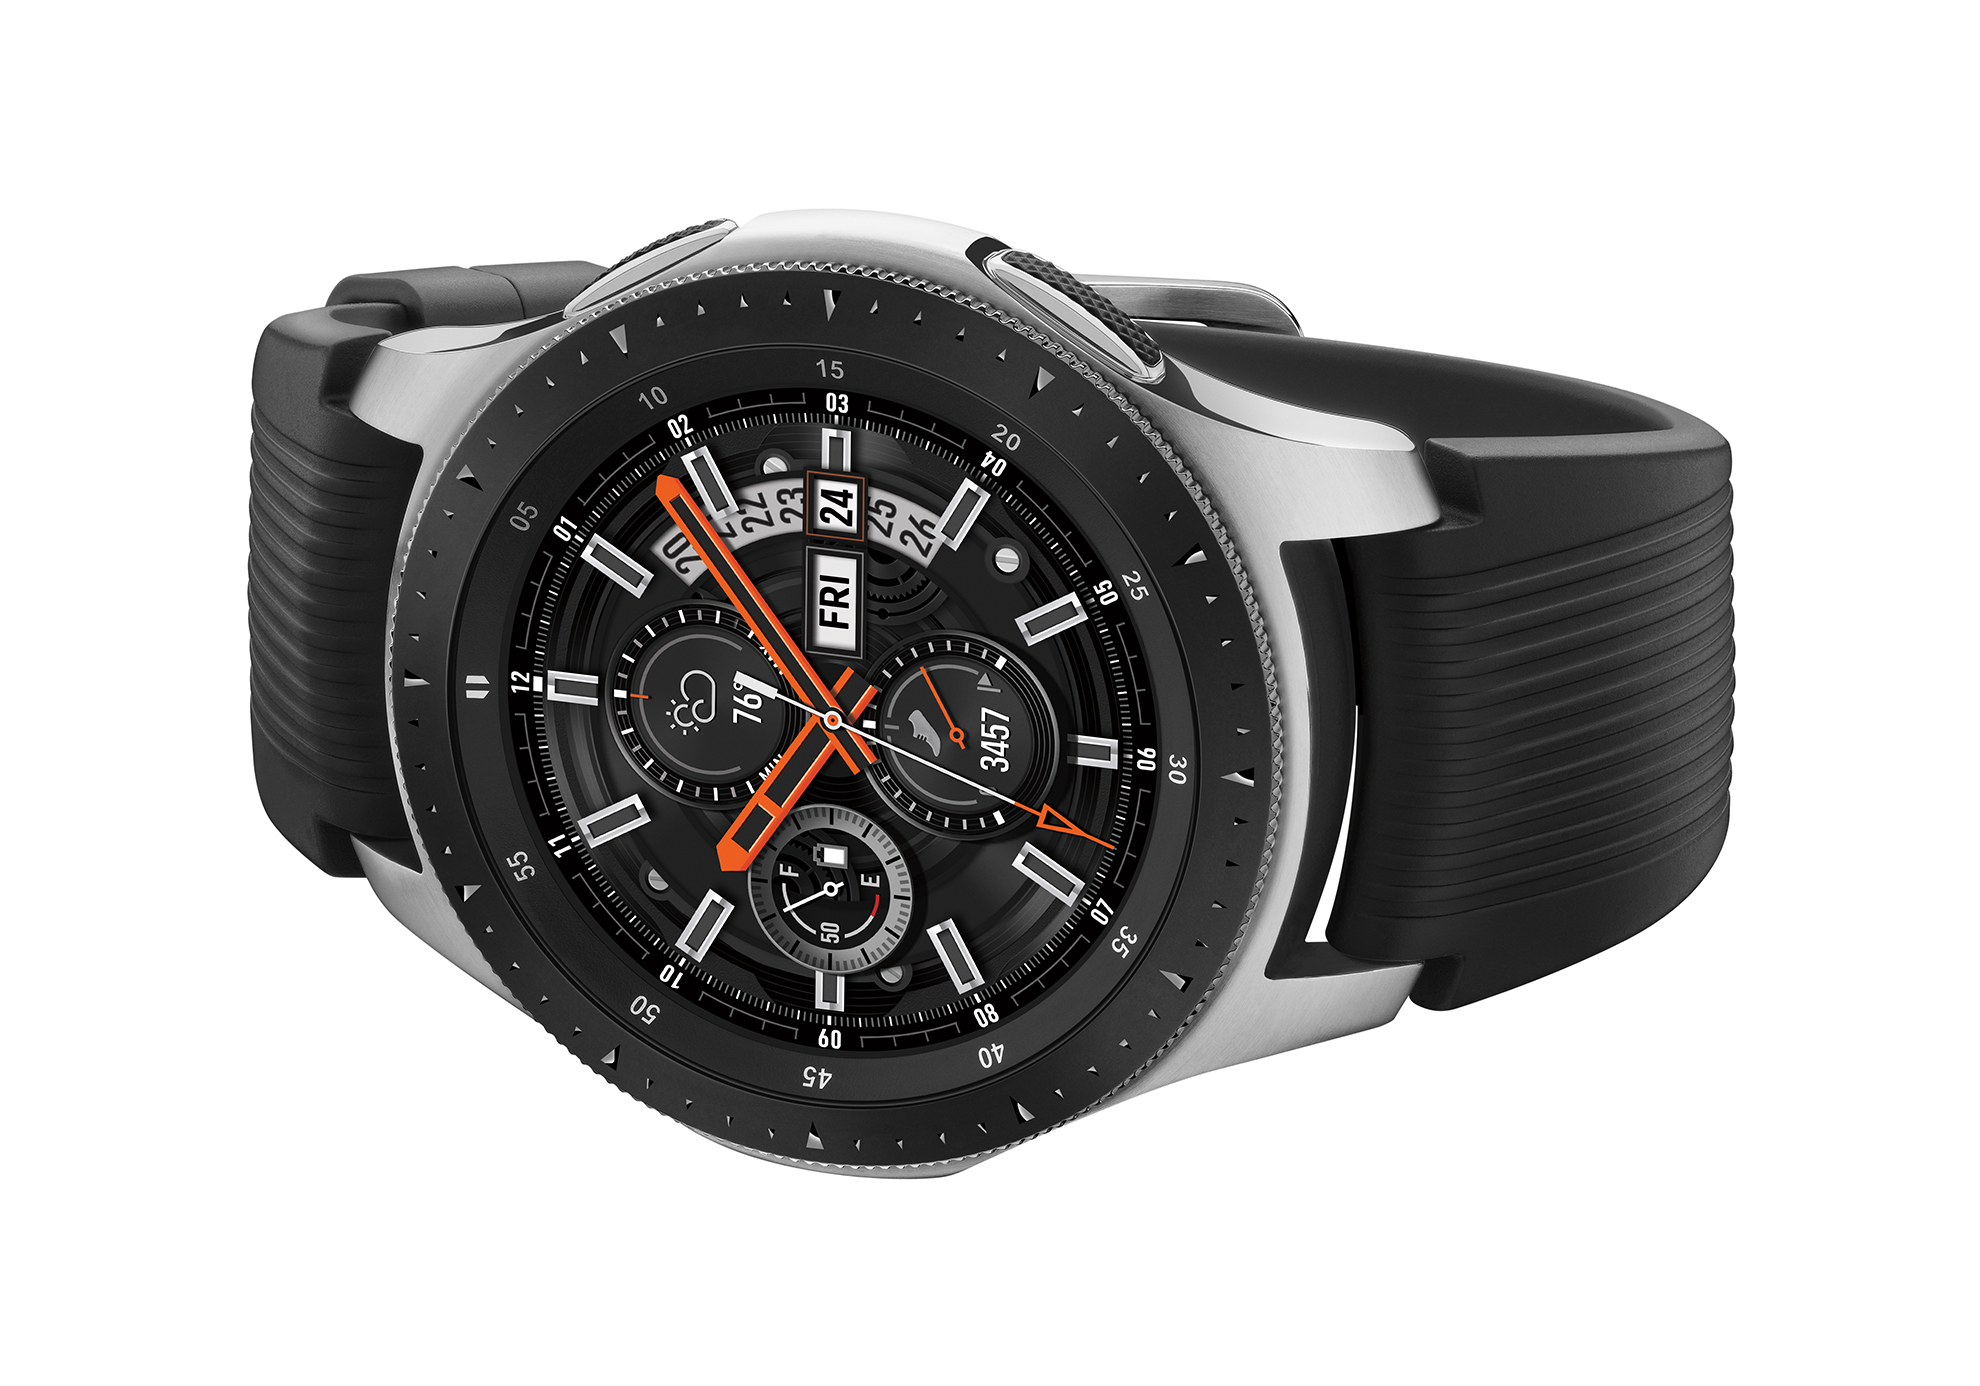 SAMSUNG Galaxy Watch - Bluetooth Smart Watch (46mm) - Silver - SM-R800NZSAXAR - image 4 of 15